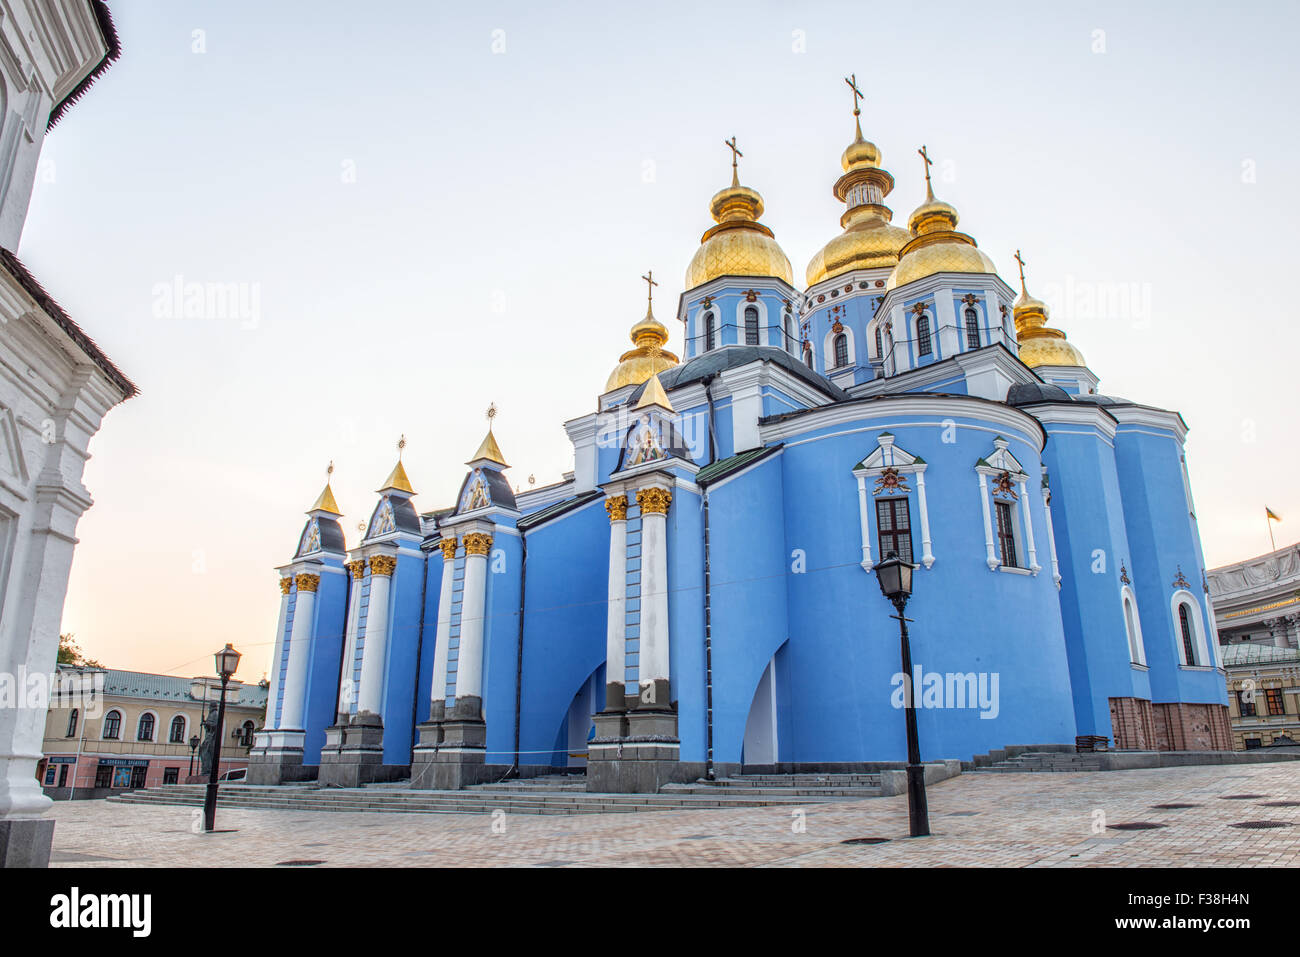 St. Michael's Golden-Domed Monastery - famous church complex in Kiev, Ukraine Stock Photo